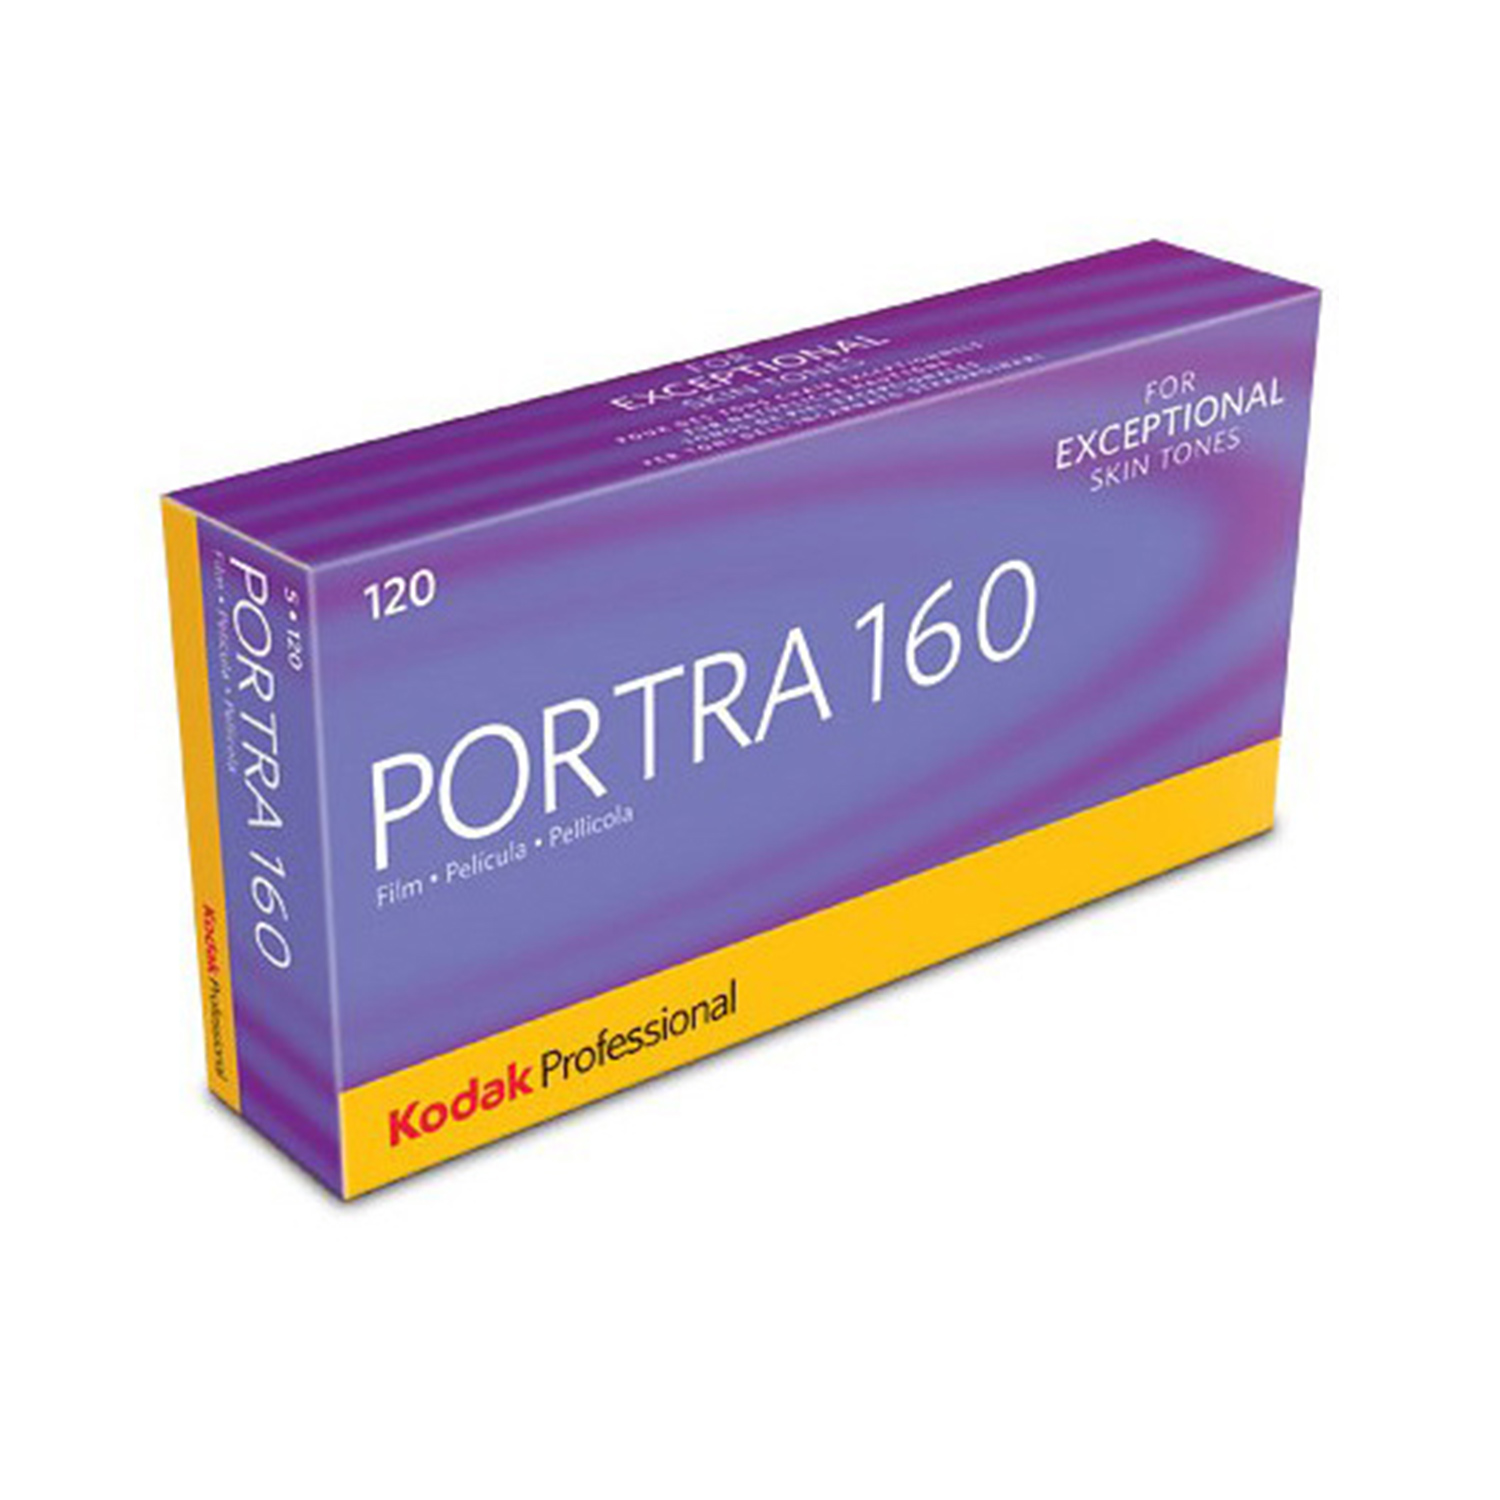 Kodak Portra Professional 160 ASA 120 Roll Film Colour Print Film - 5 Pack!